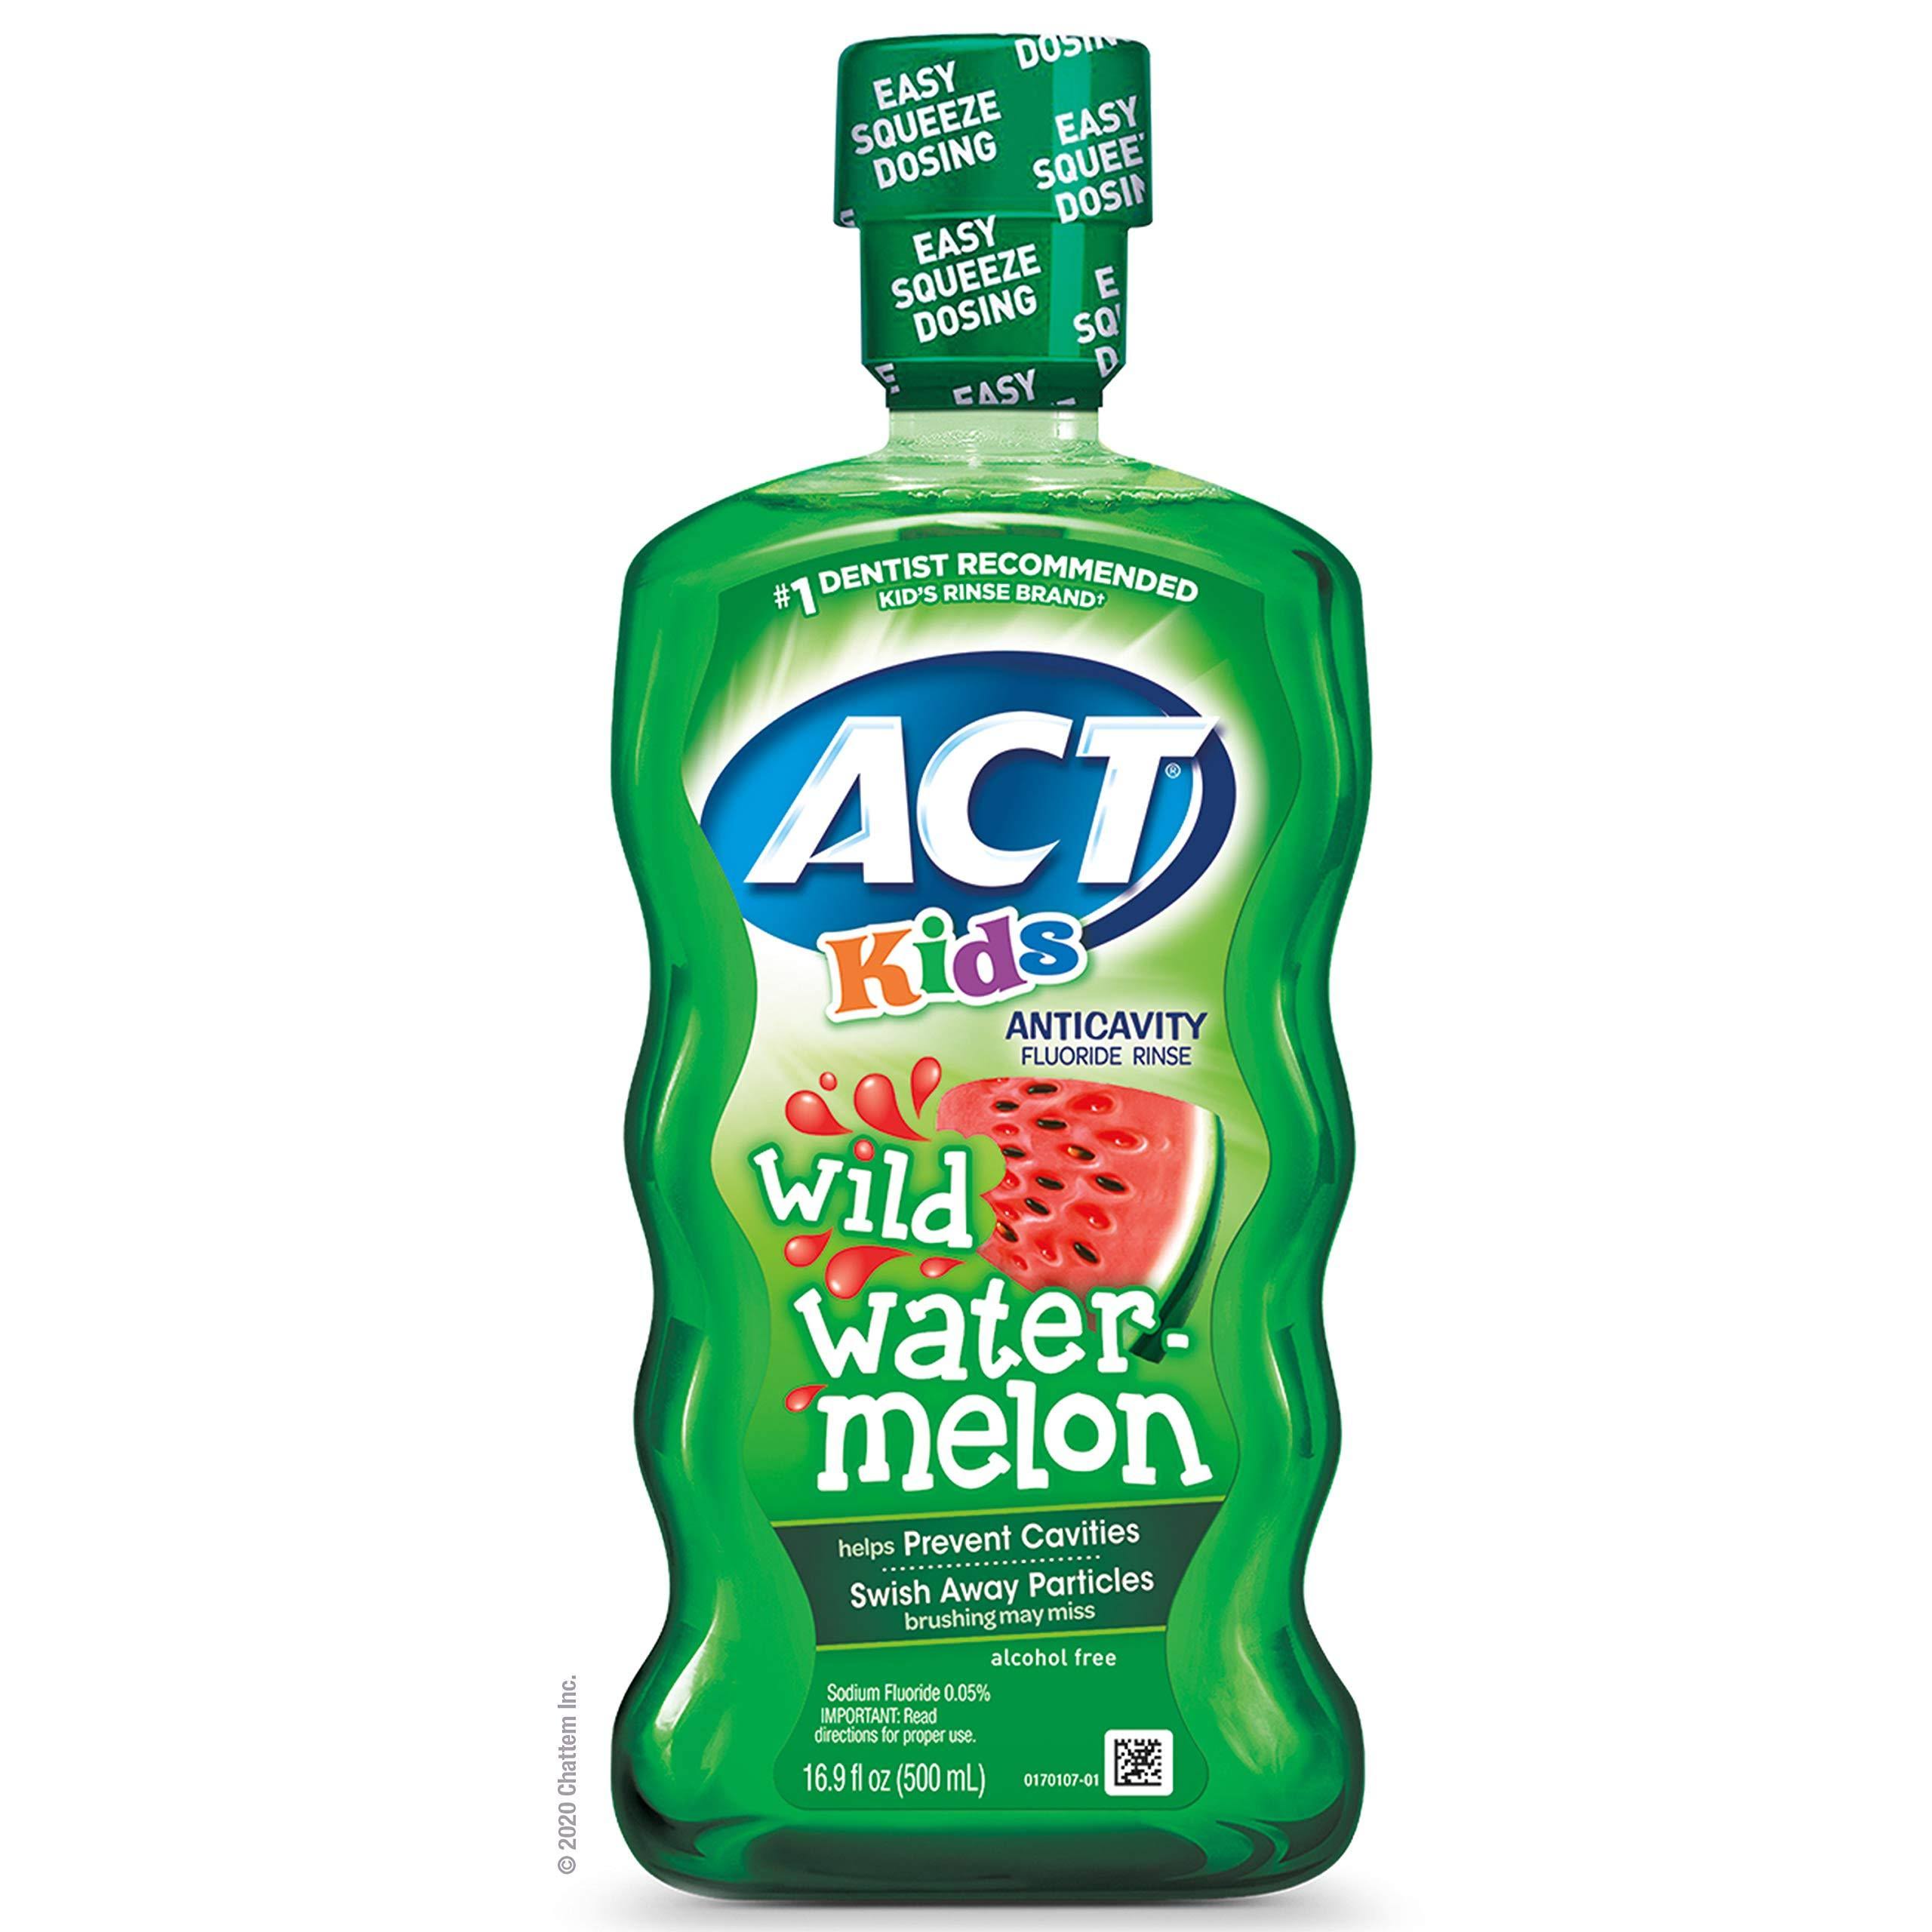 ACT Kids Anticavity Fluoride Rinse - Wild Watermelon, 16.9oz